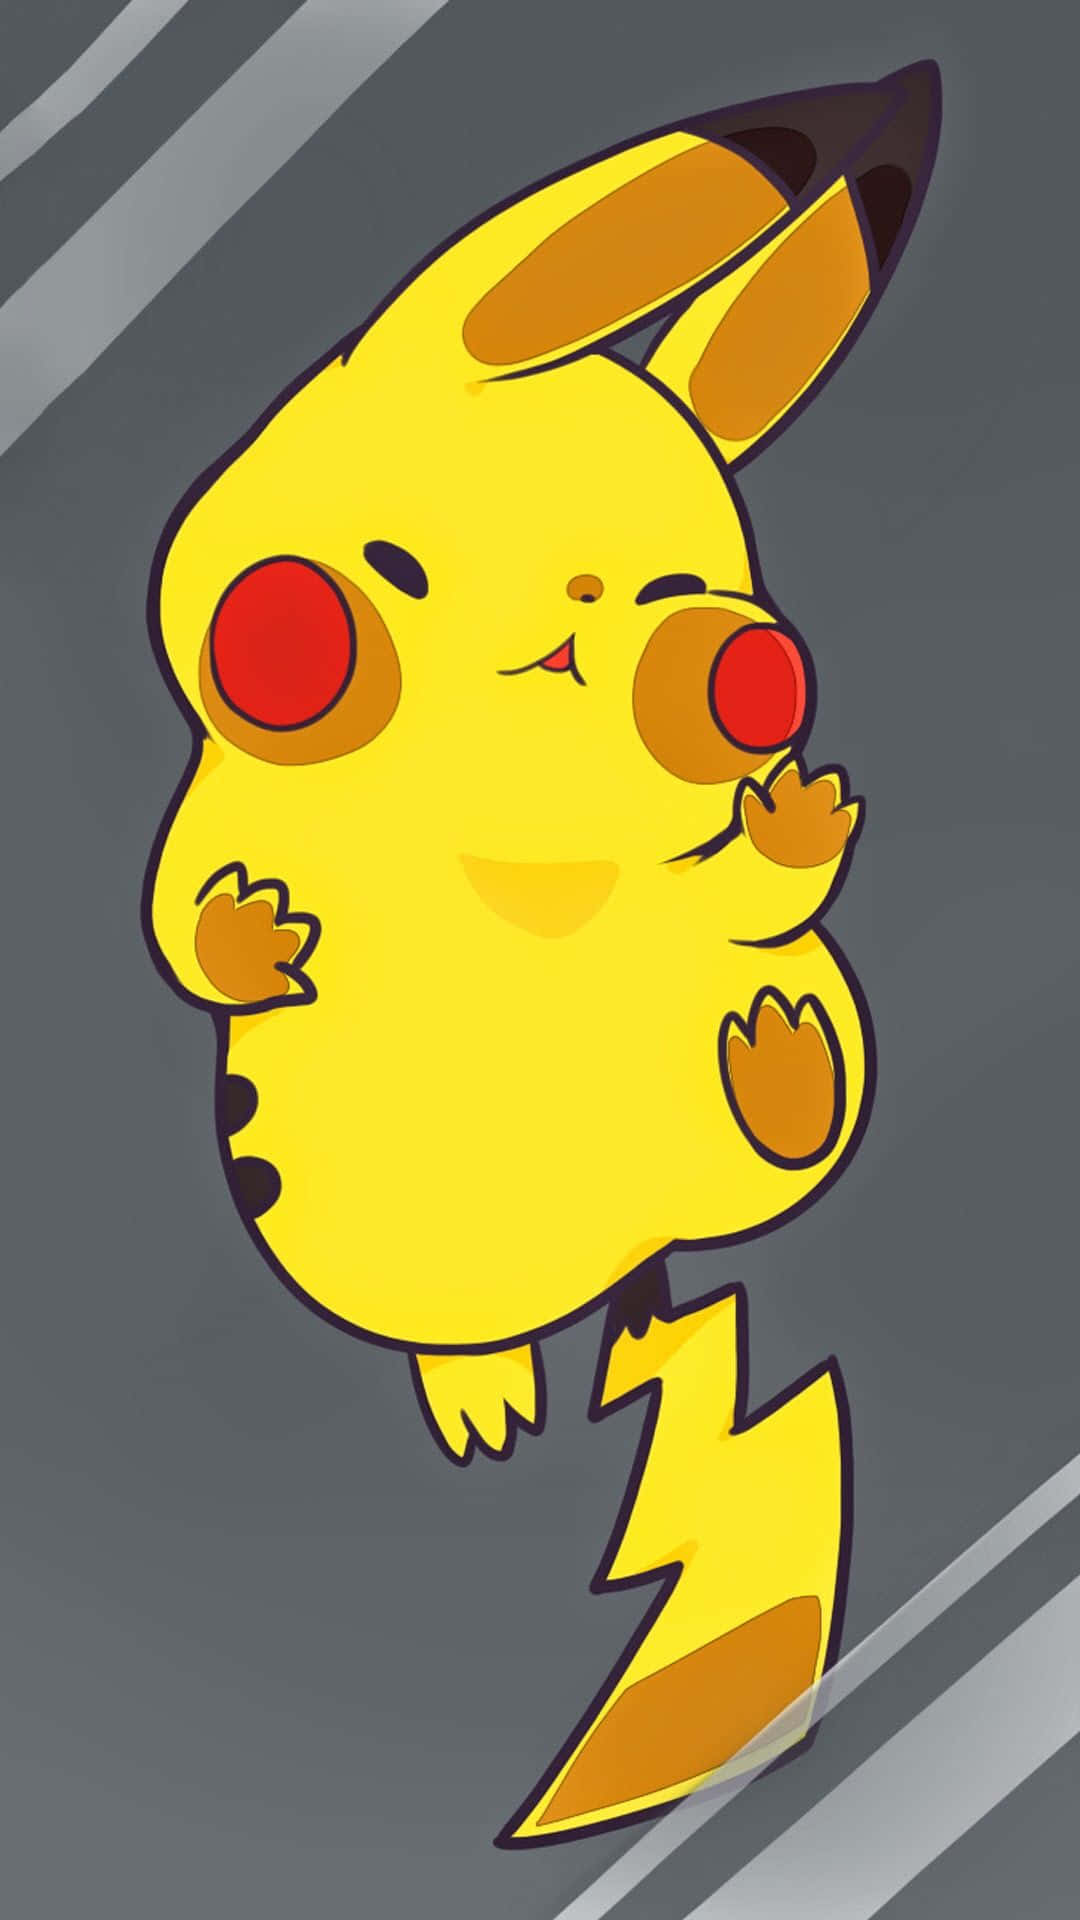 Cute Chibi Pikachu Illustration Wallpaper